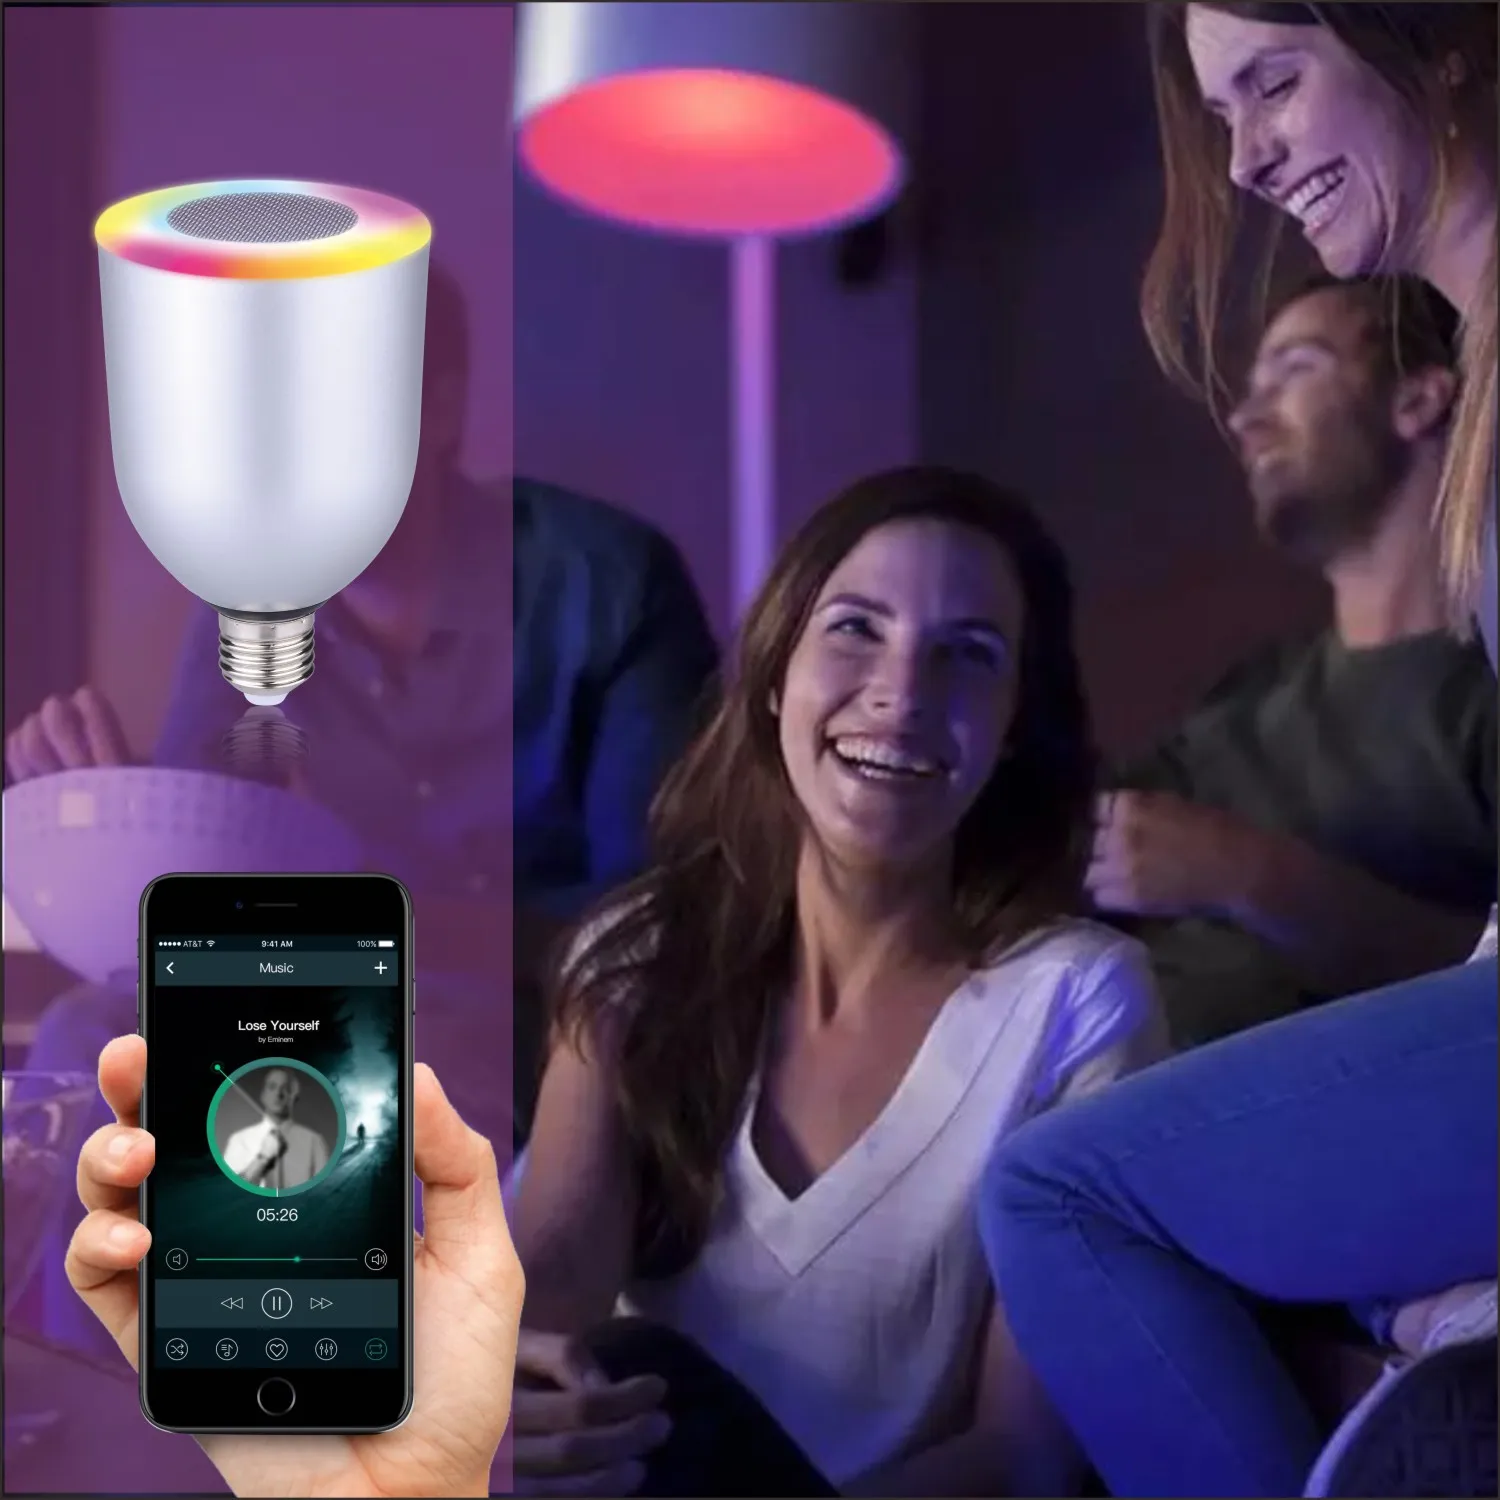 Altoparlante Bluetooth E27 Lampadina a LED Lampada colorata IOS Android Smart Phone Lettore musicale PC Lampada colori Wireless regolabile da DHL